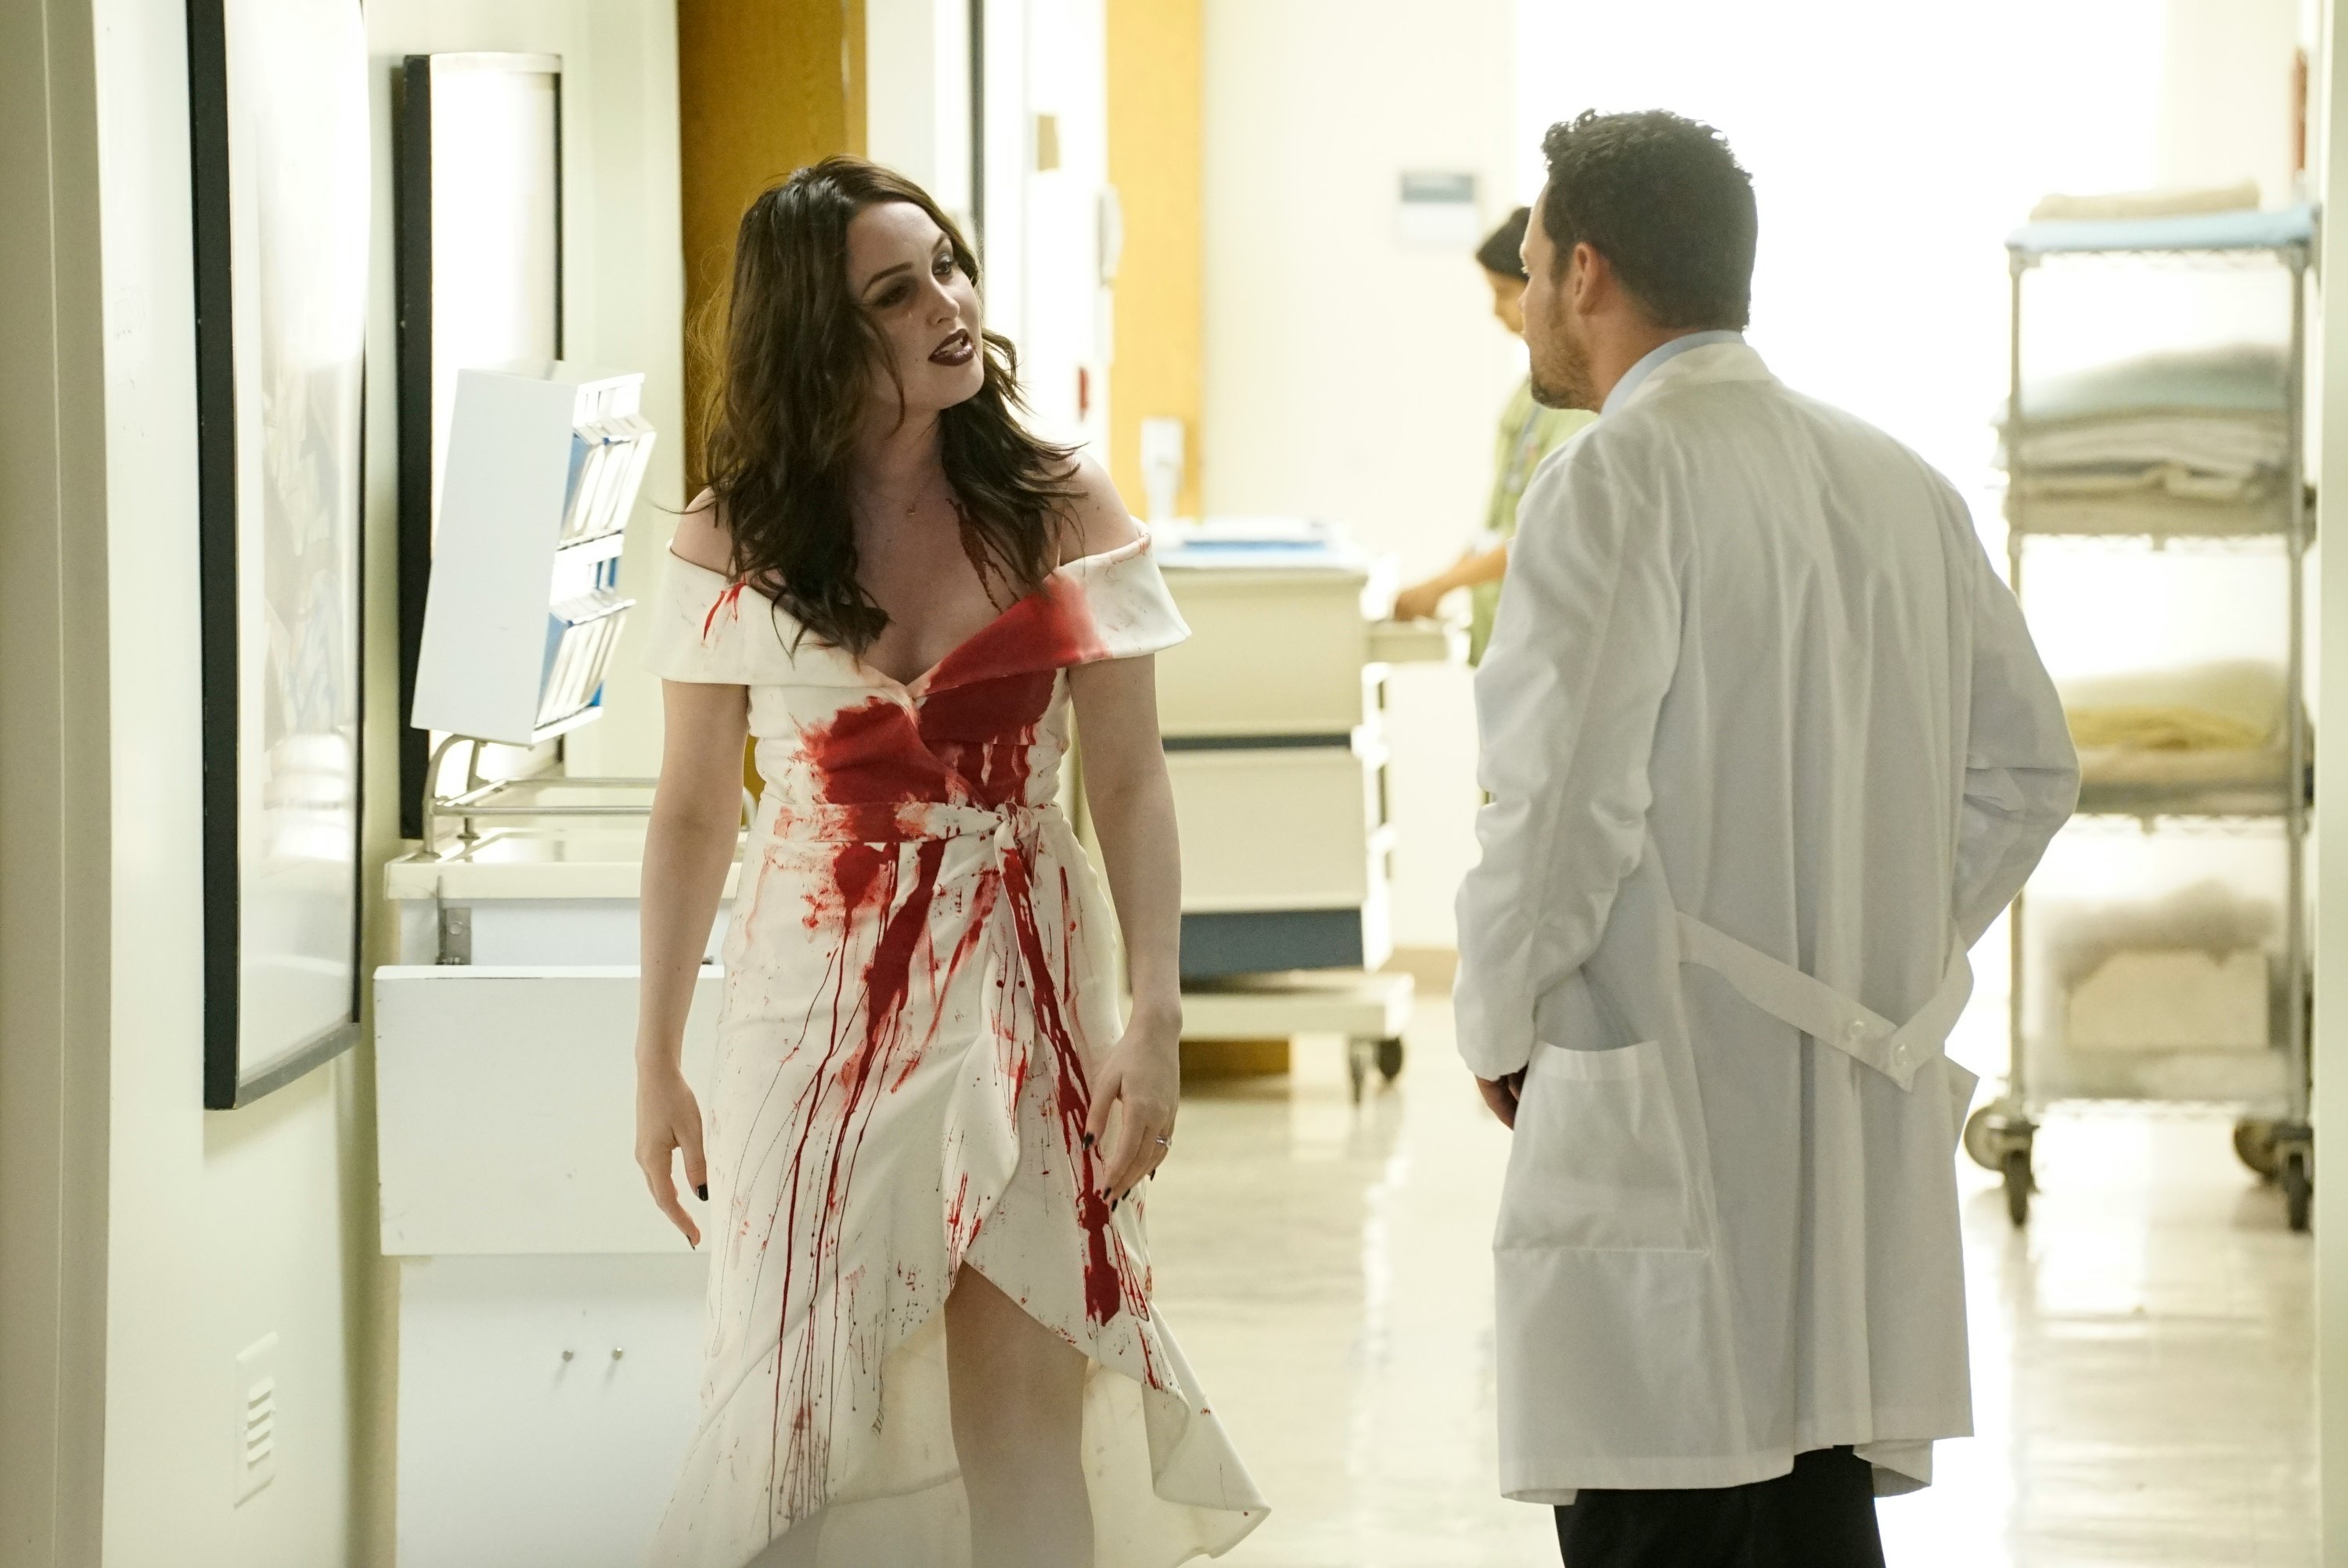 Jo Alex S Vow Renewal On Grey S Anatomy Will Make You Cry